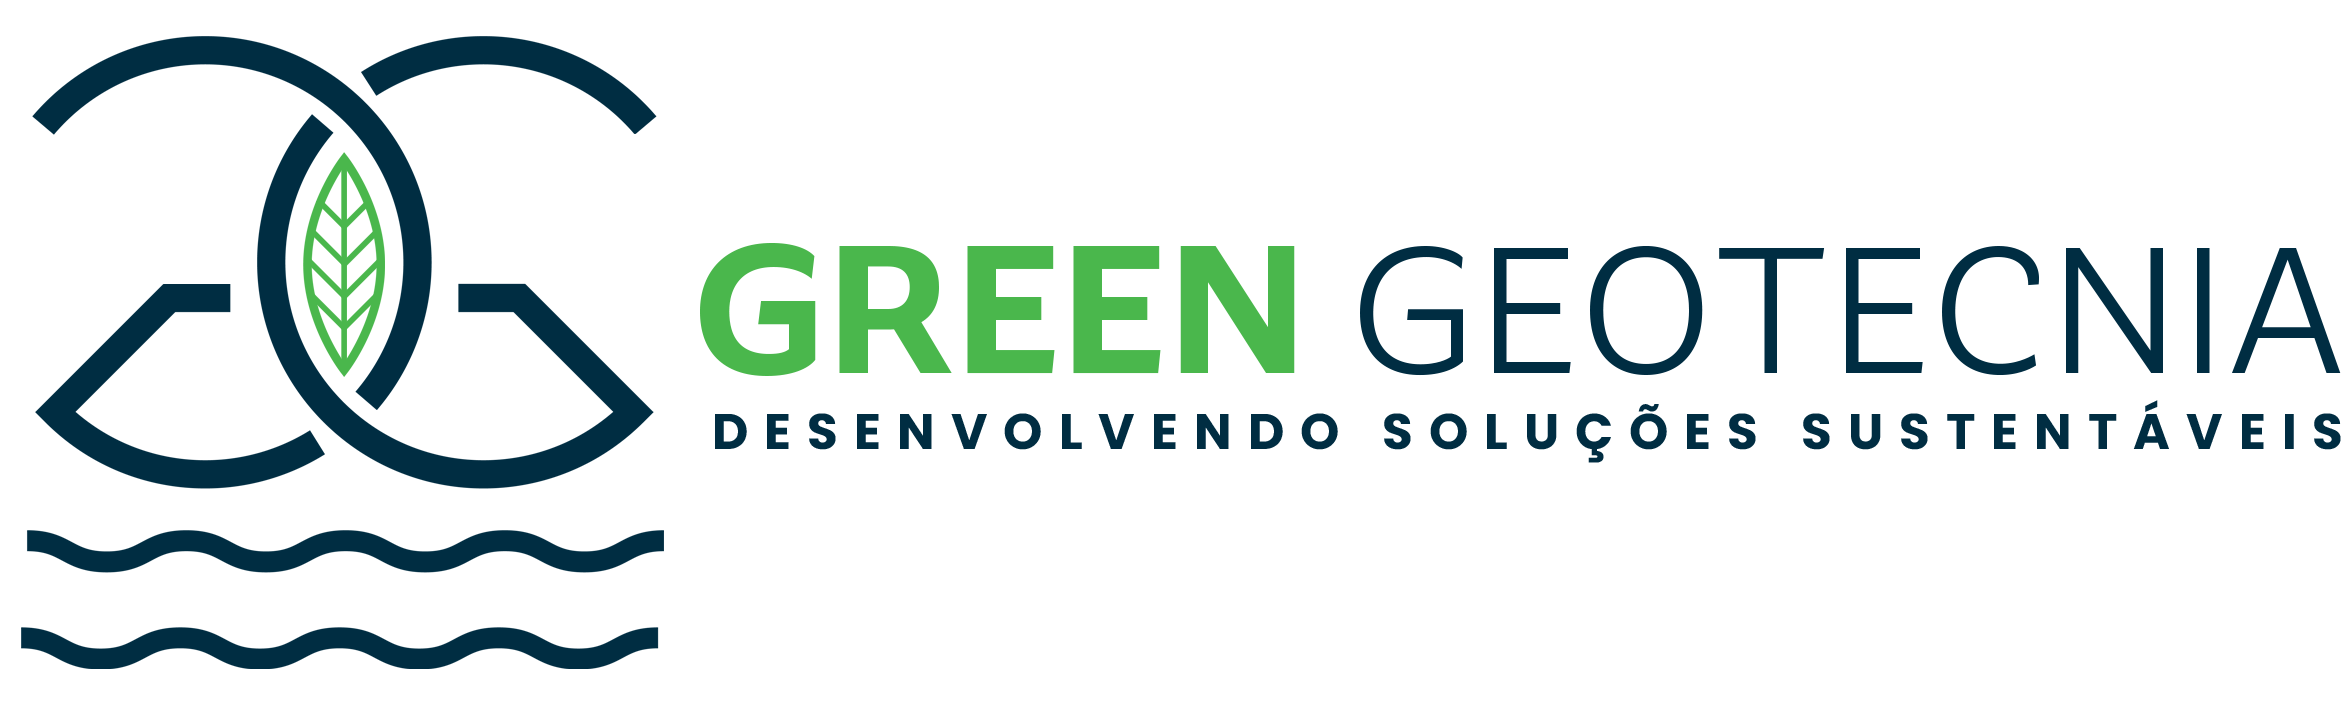 Green Geotecnia